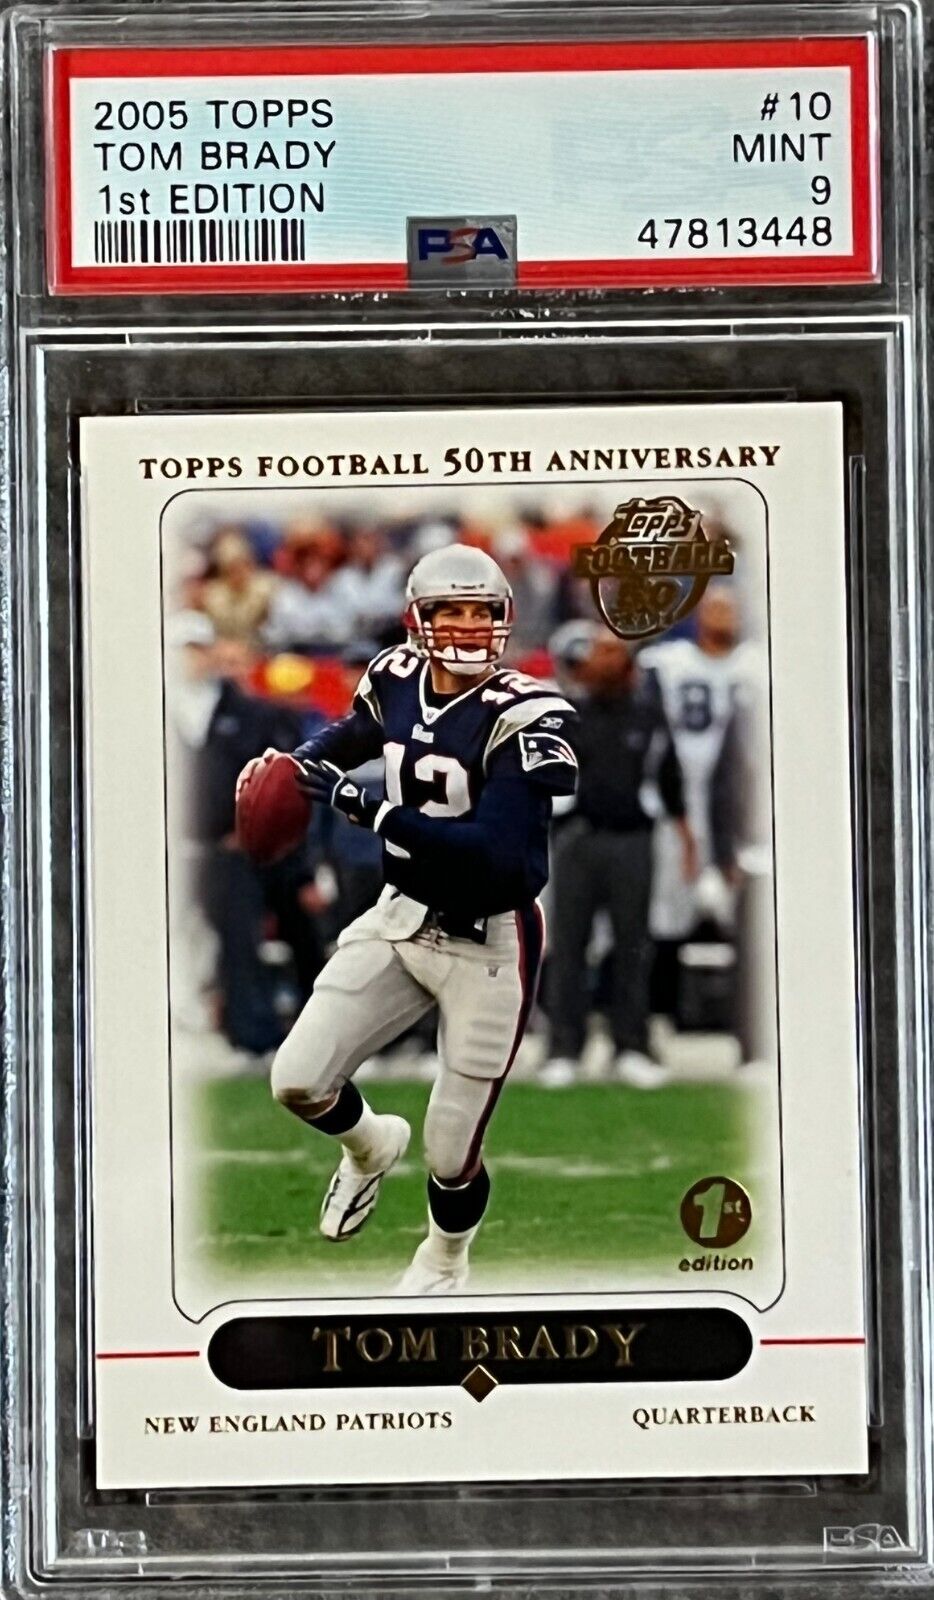 2005 Topps Patriots Tom Brady 1st Edition PSA 9 MINT 448